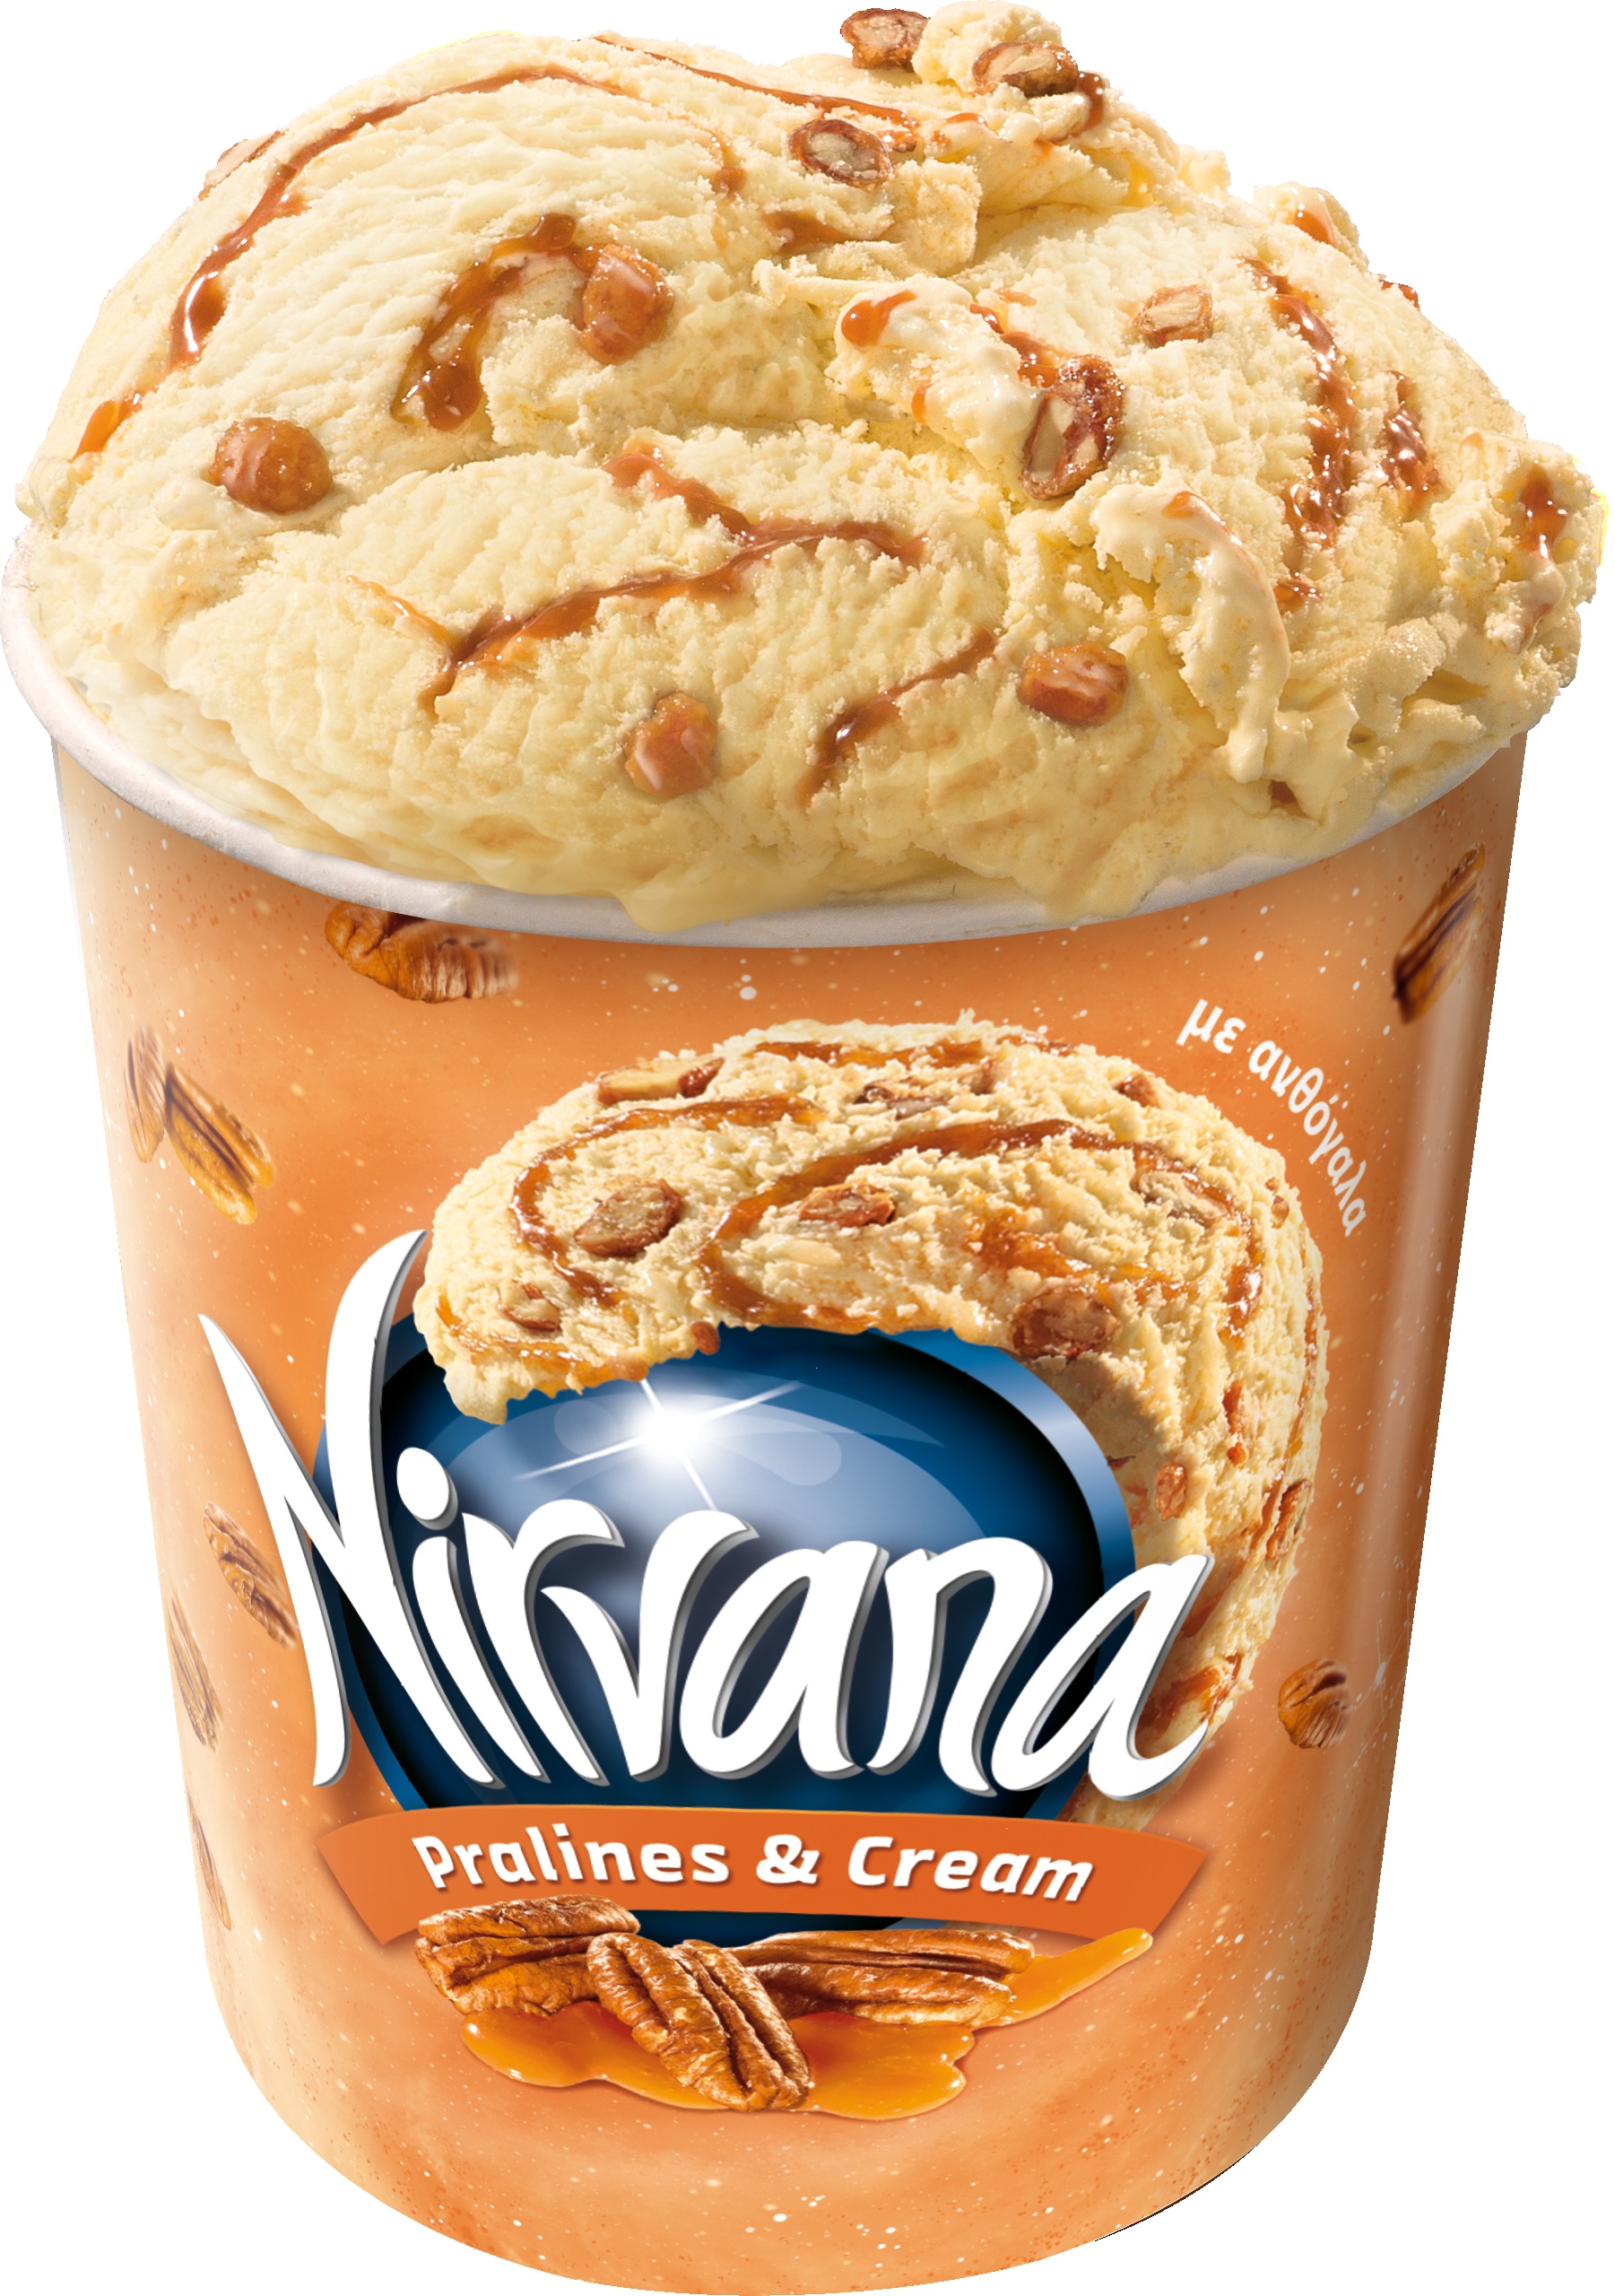 Slika za Sladoled Nirvana pralines and cream 360g